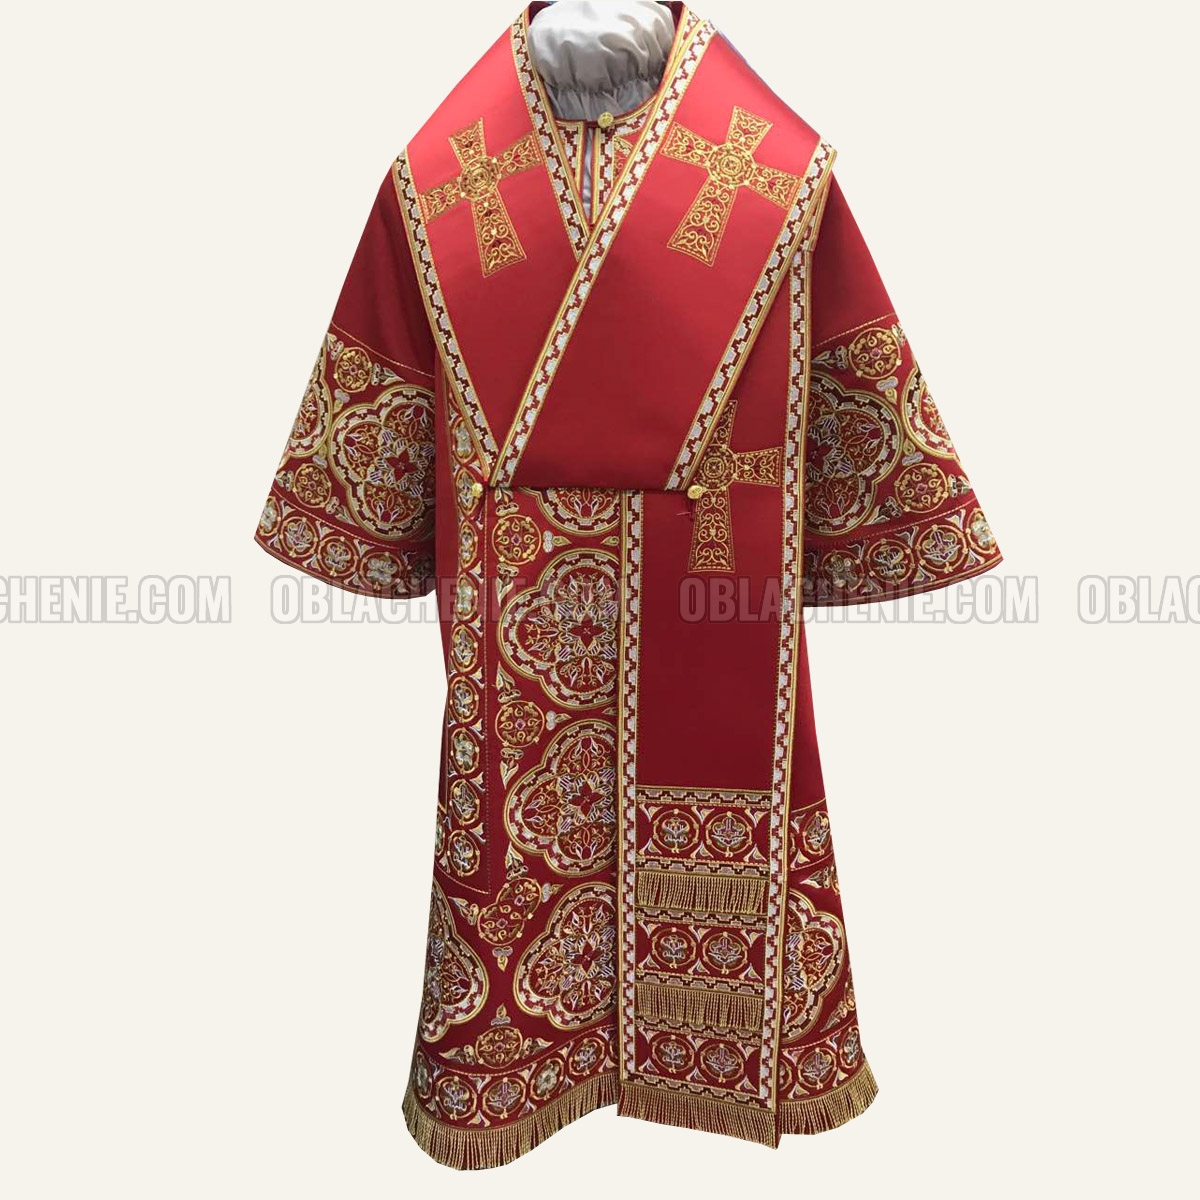 Embroidered Bishop's vestment 10642